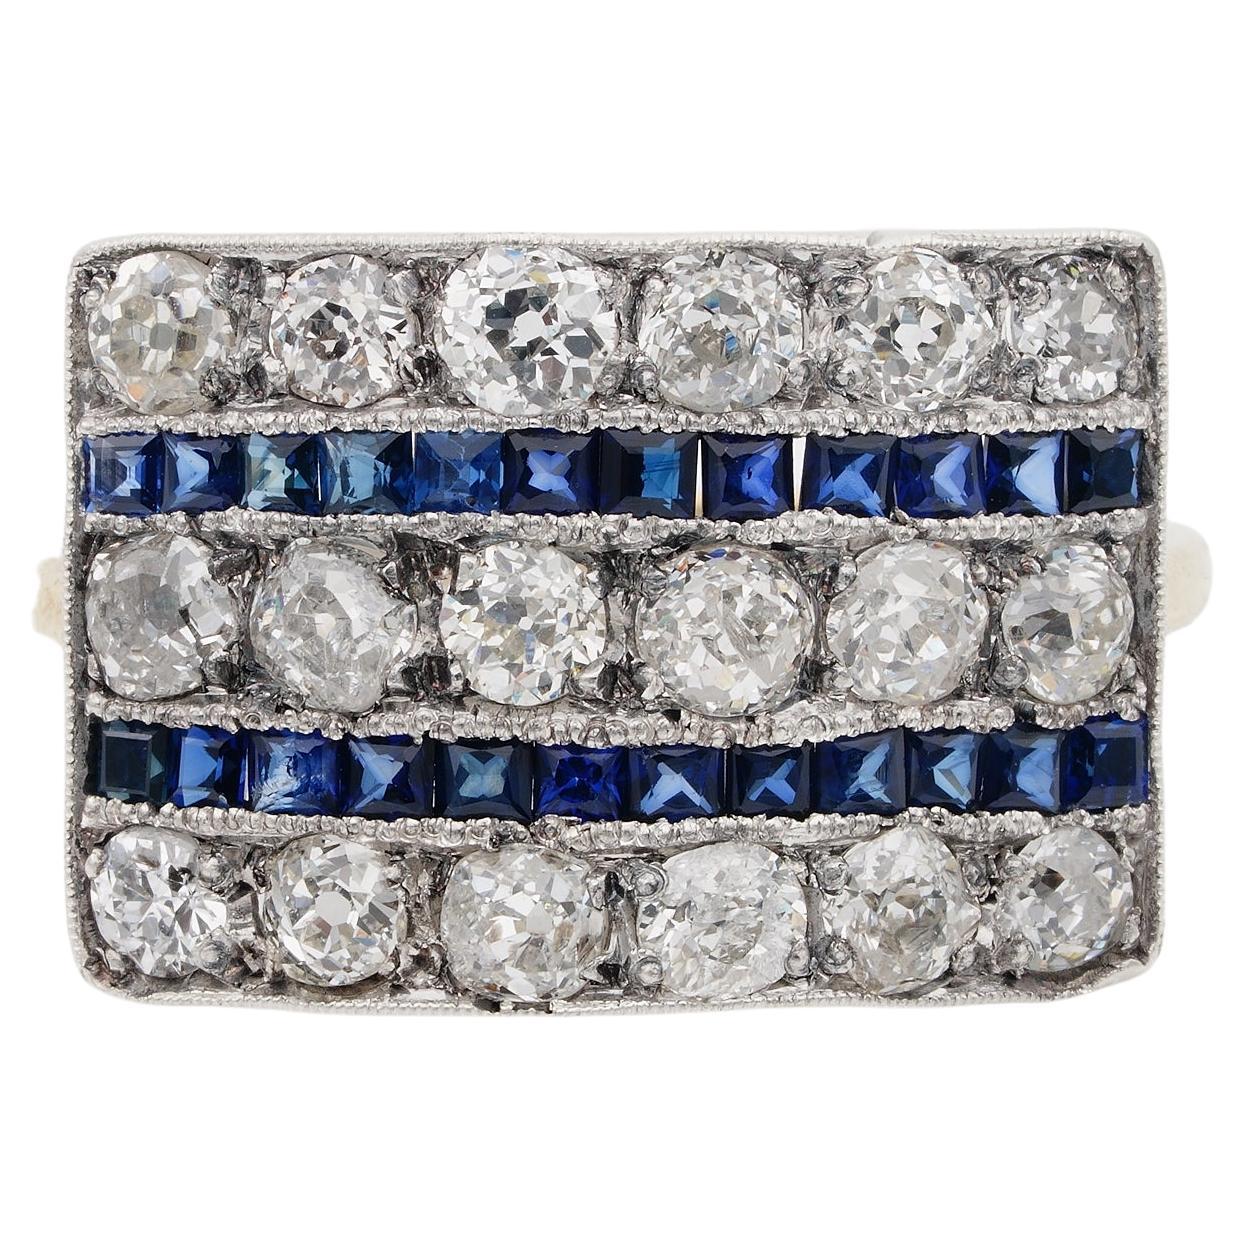 Art Deco 2.70 ct Diamond 1.40 Ct Bluel Sapphire Wide Panel Ring